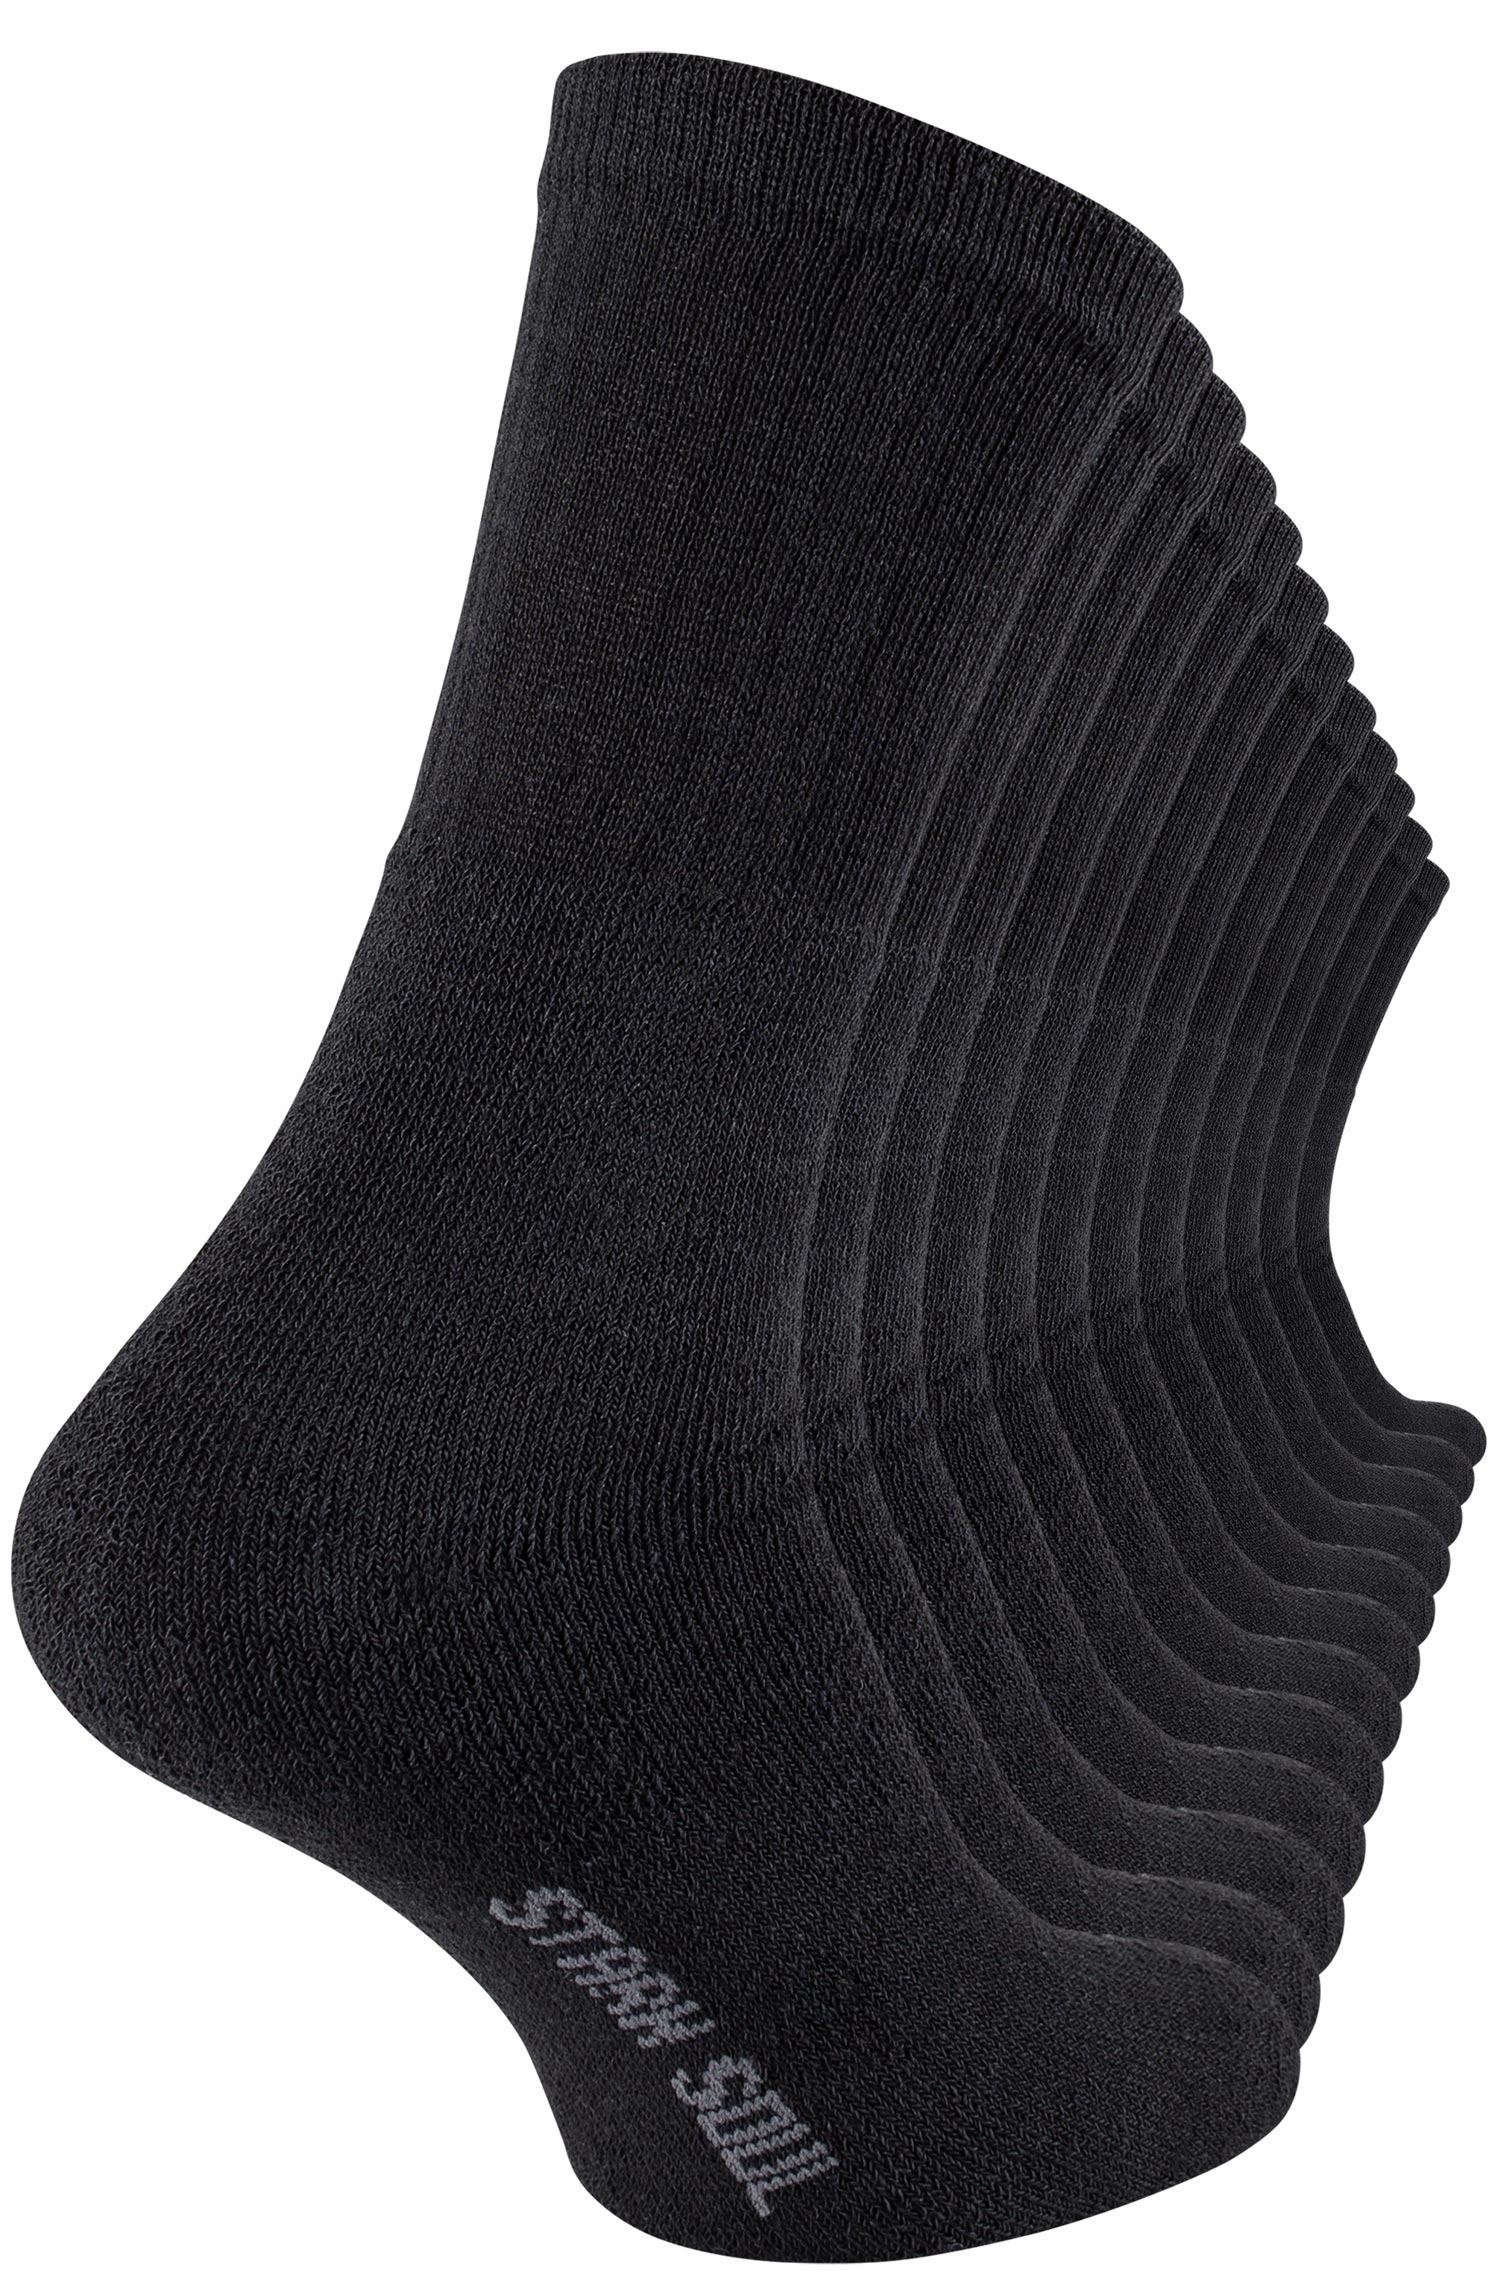 Crew Socken - 6 oder 12 Paar Tennissocken in schwarz | Sockswear | Herren